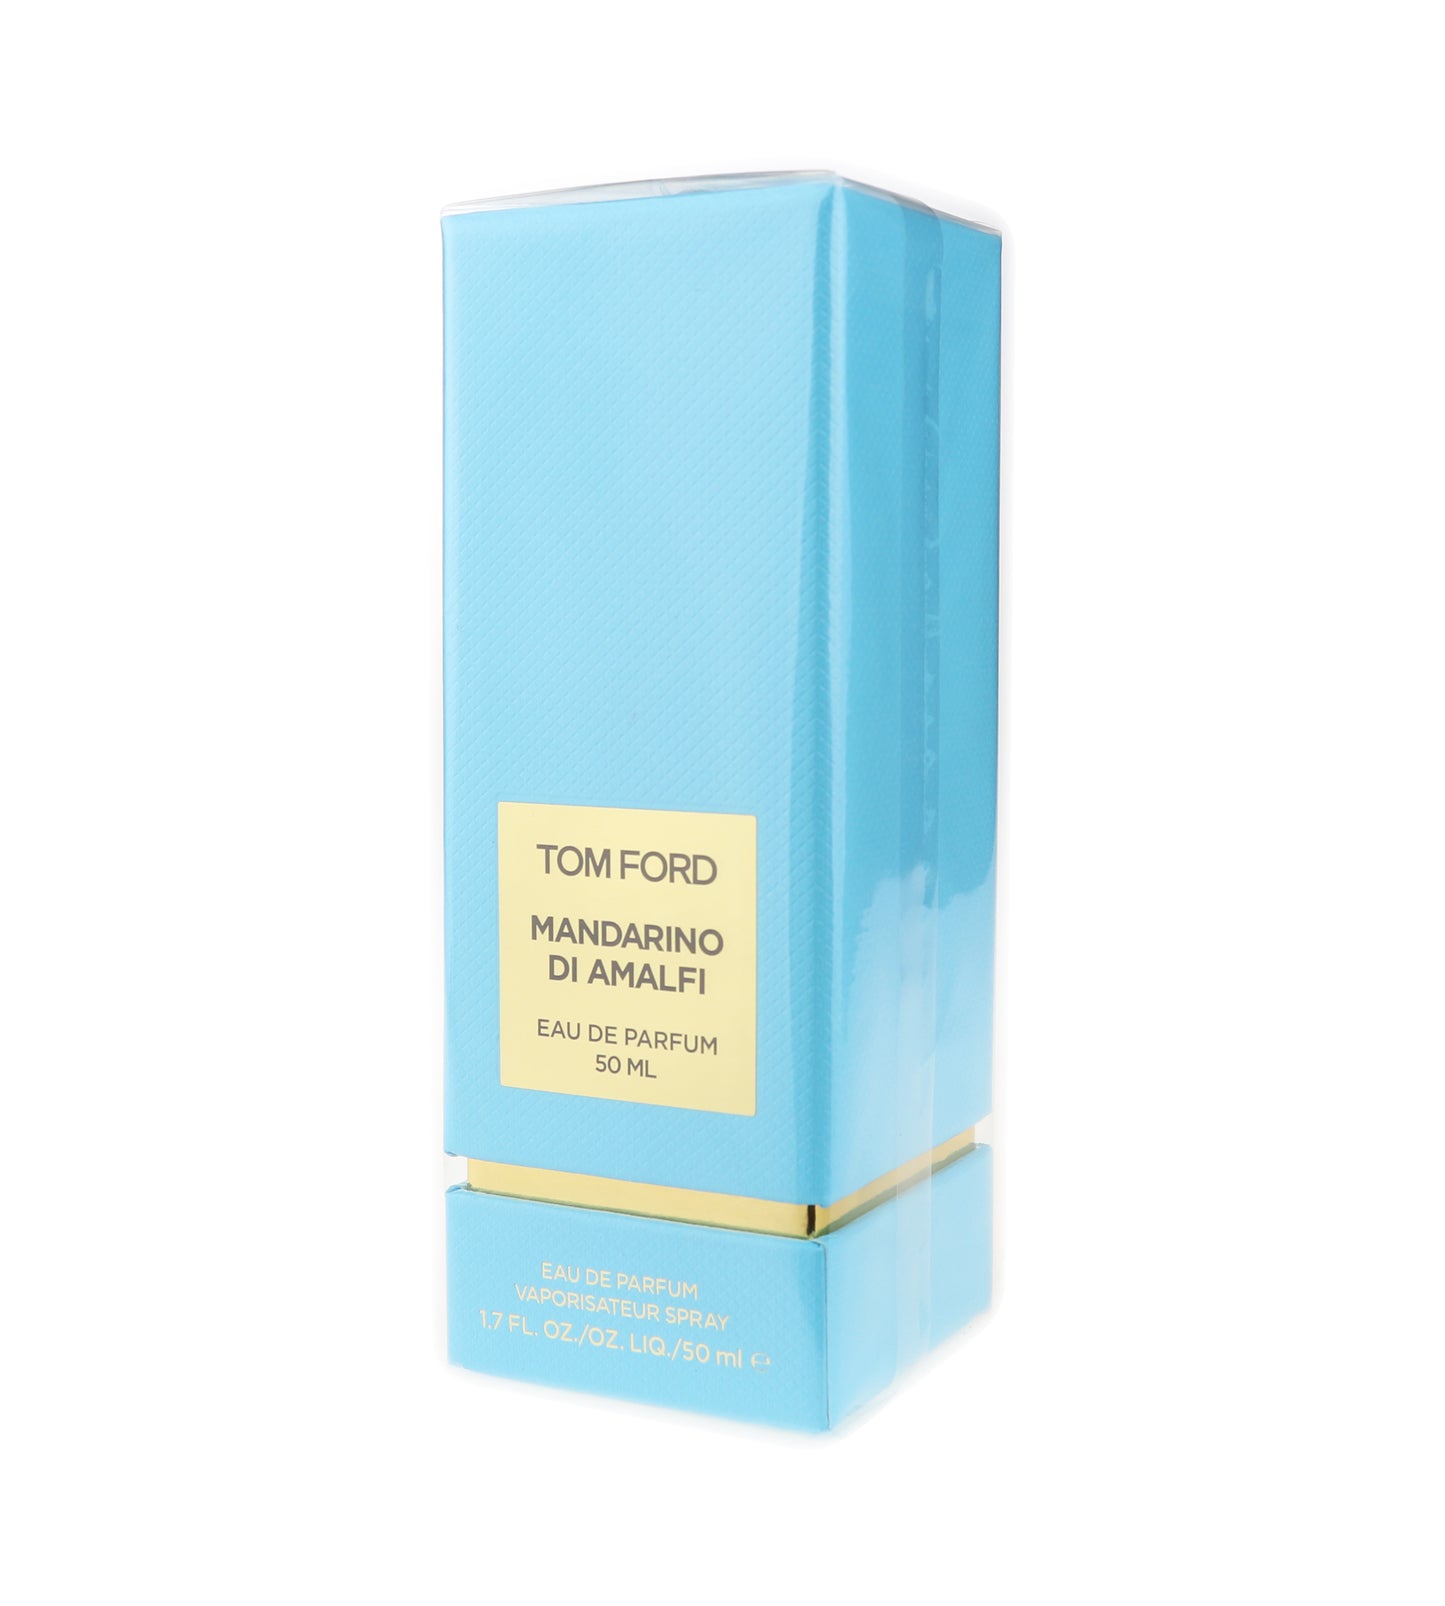 Tom Ford 'Mandarino Di Amalfi' Eau De Parfum 1.7oz/50ml New In Box